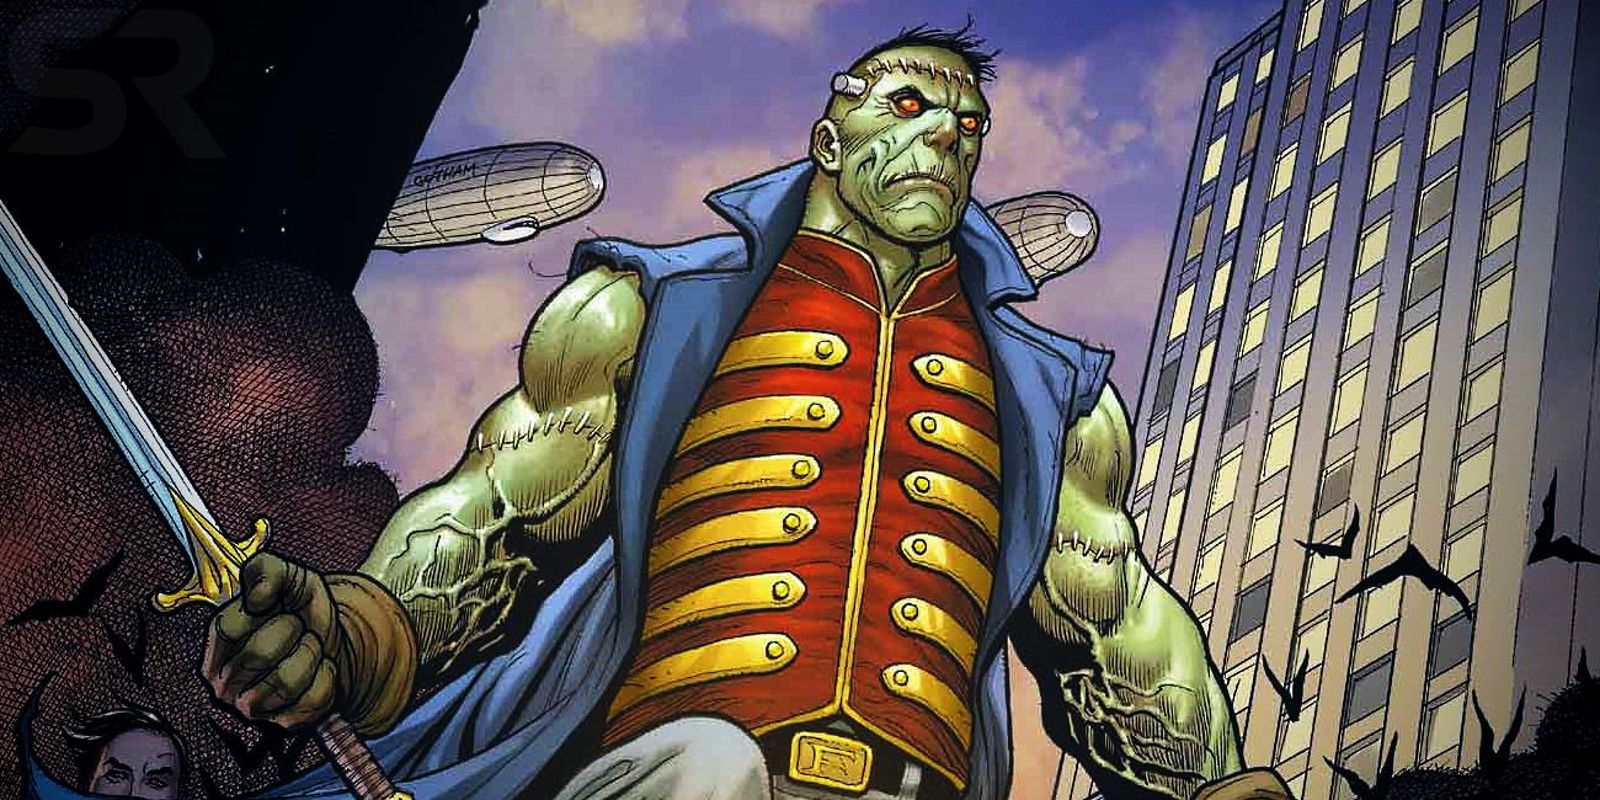 Frankenstein wielding a sword in Gotham City in DC comics